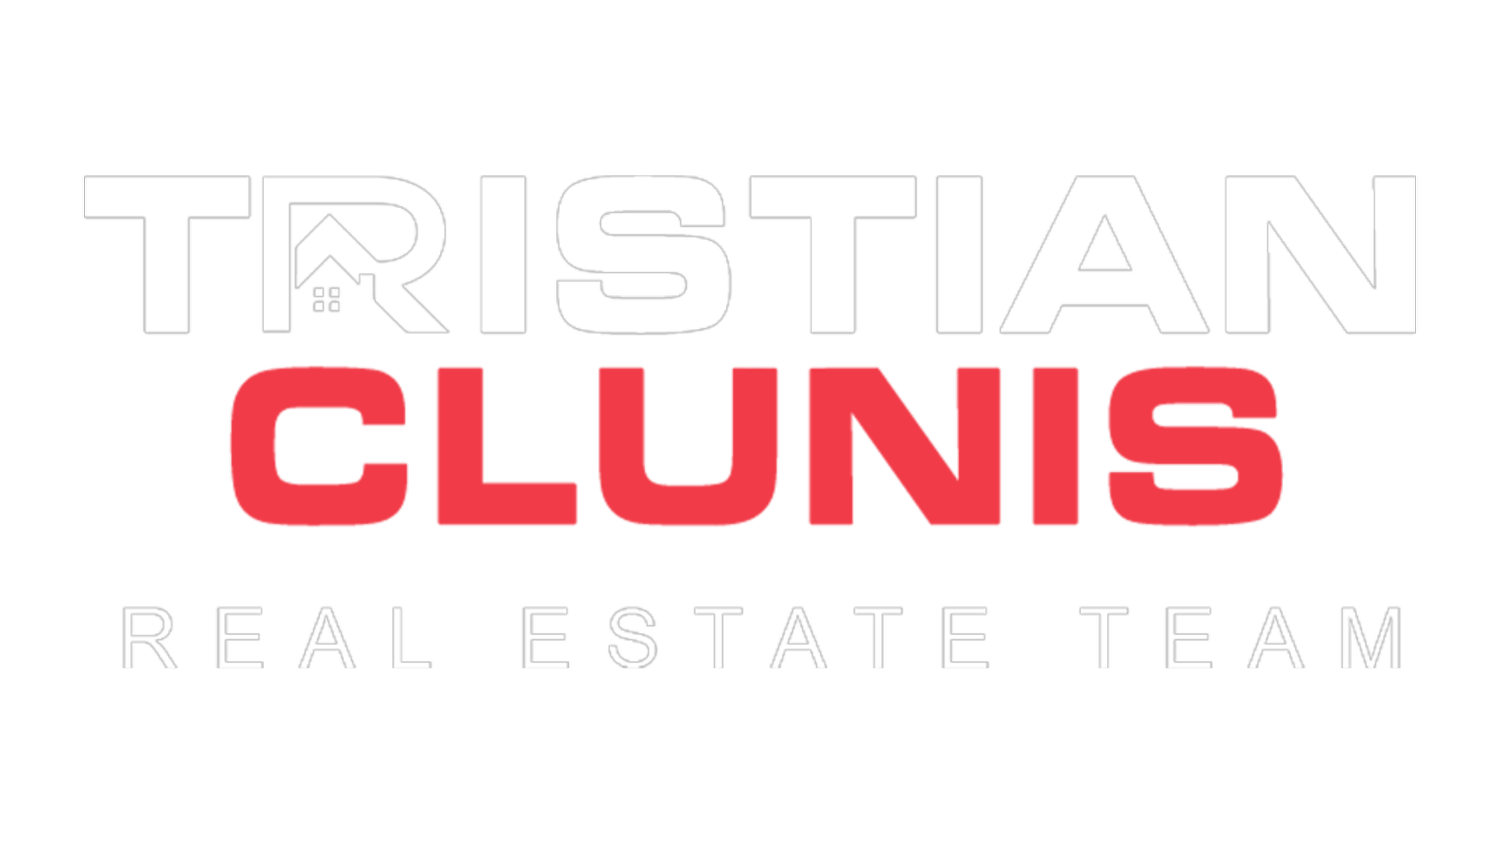 Tristian Clunis Real Estate